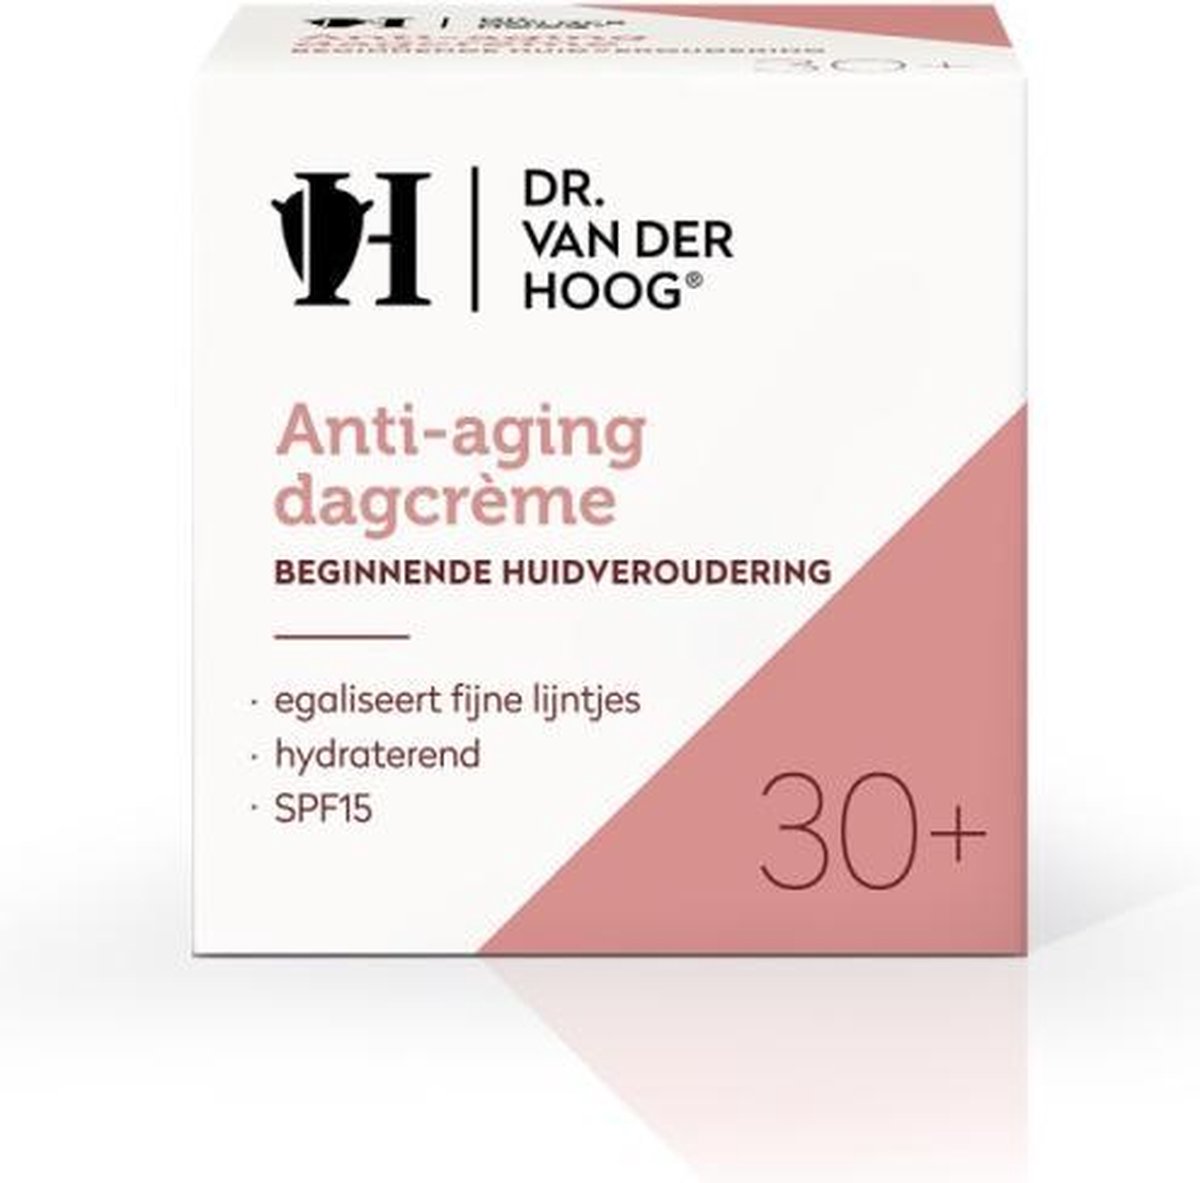 Dr. van der Hoog anti-aging dagcrème SPF 30+